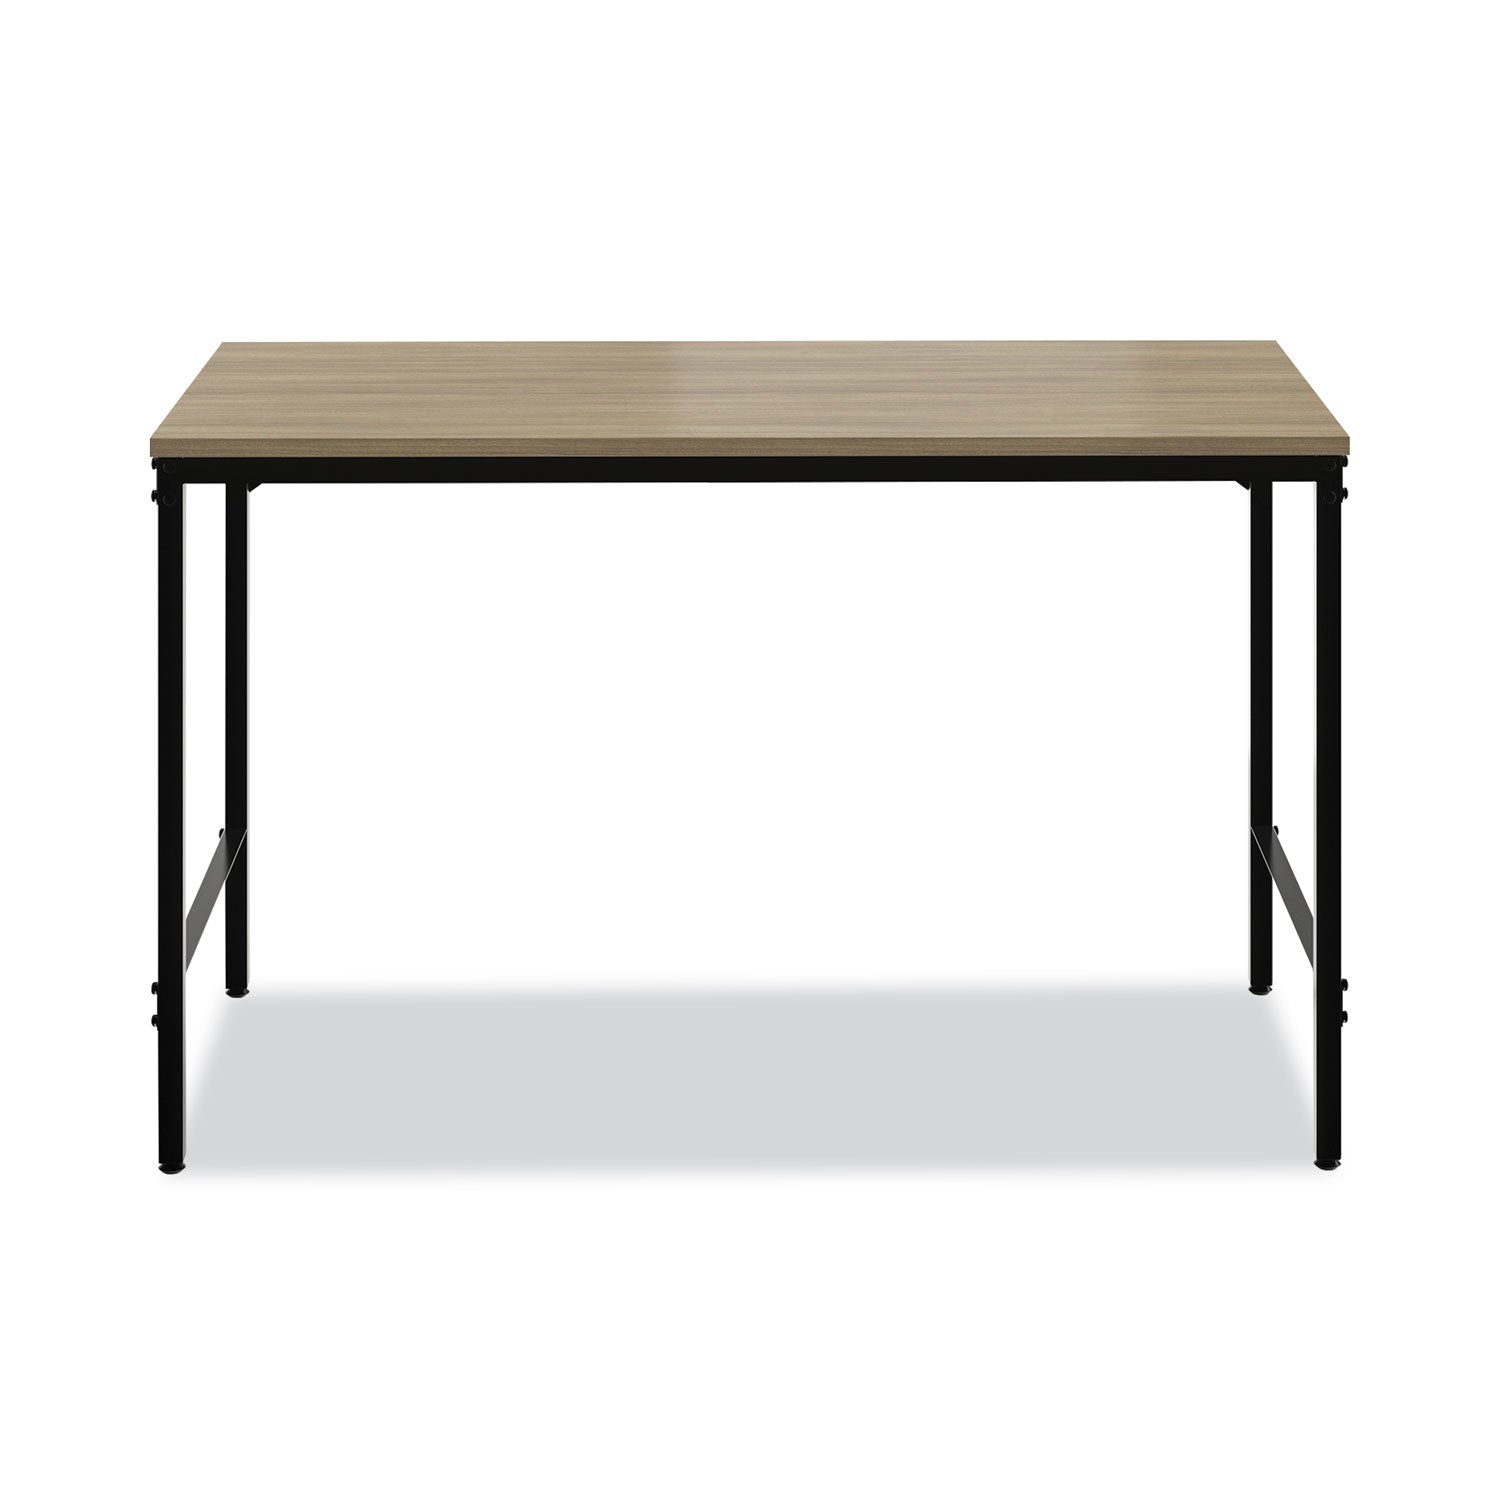 simple-work-desk-455-x-235-x-295-walnut_saf5272blwl - 1